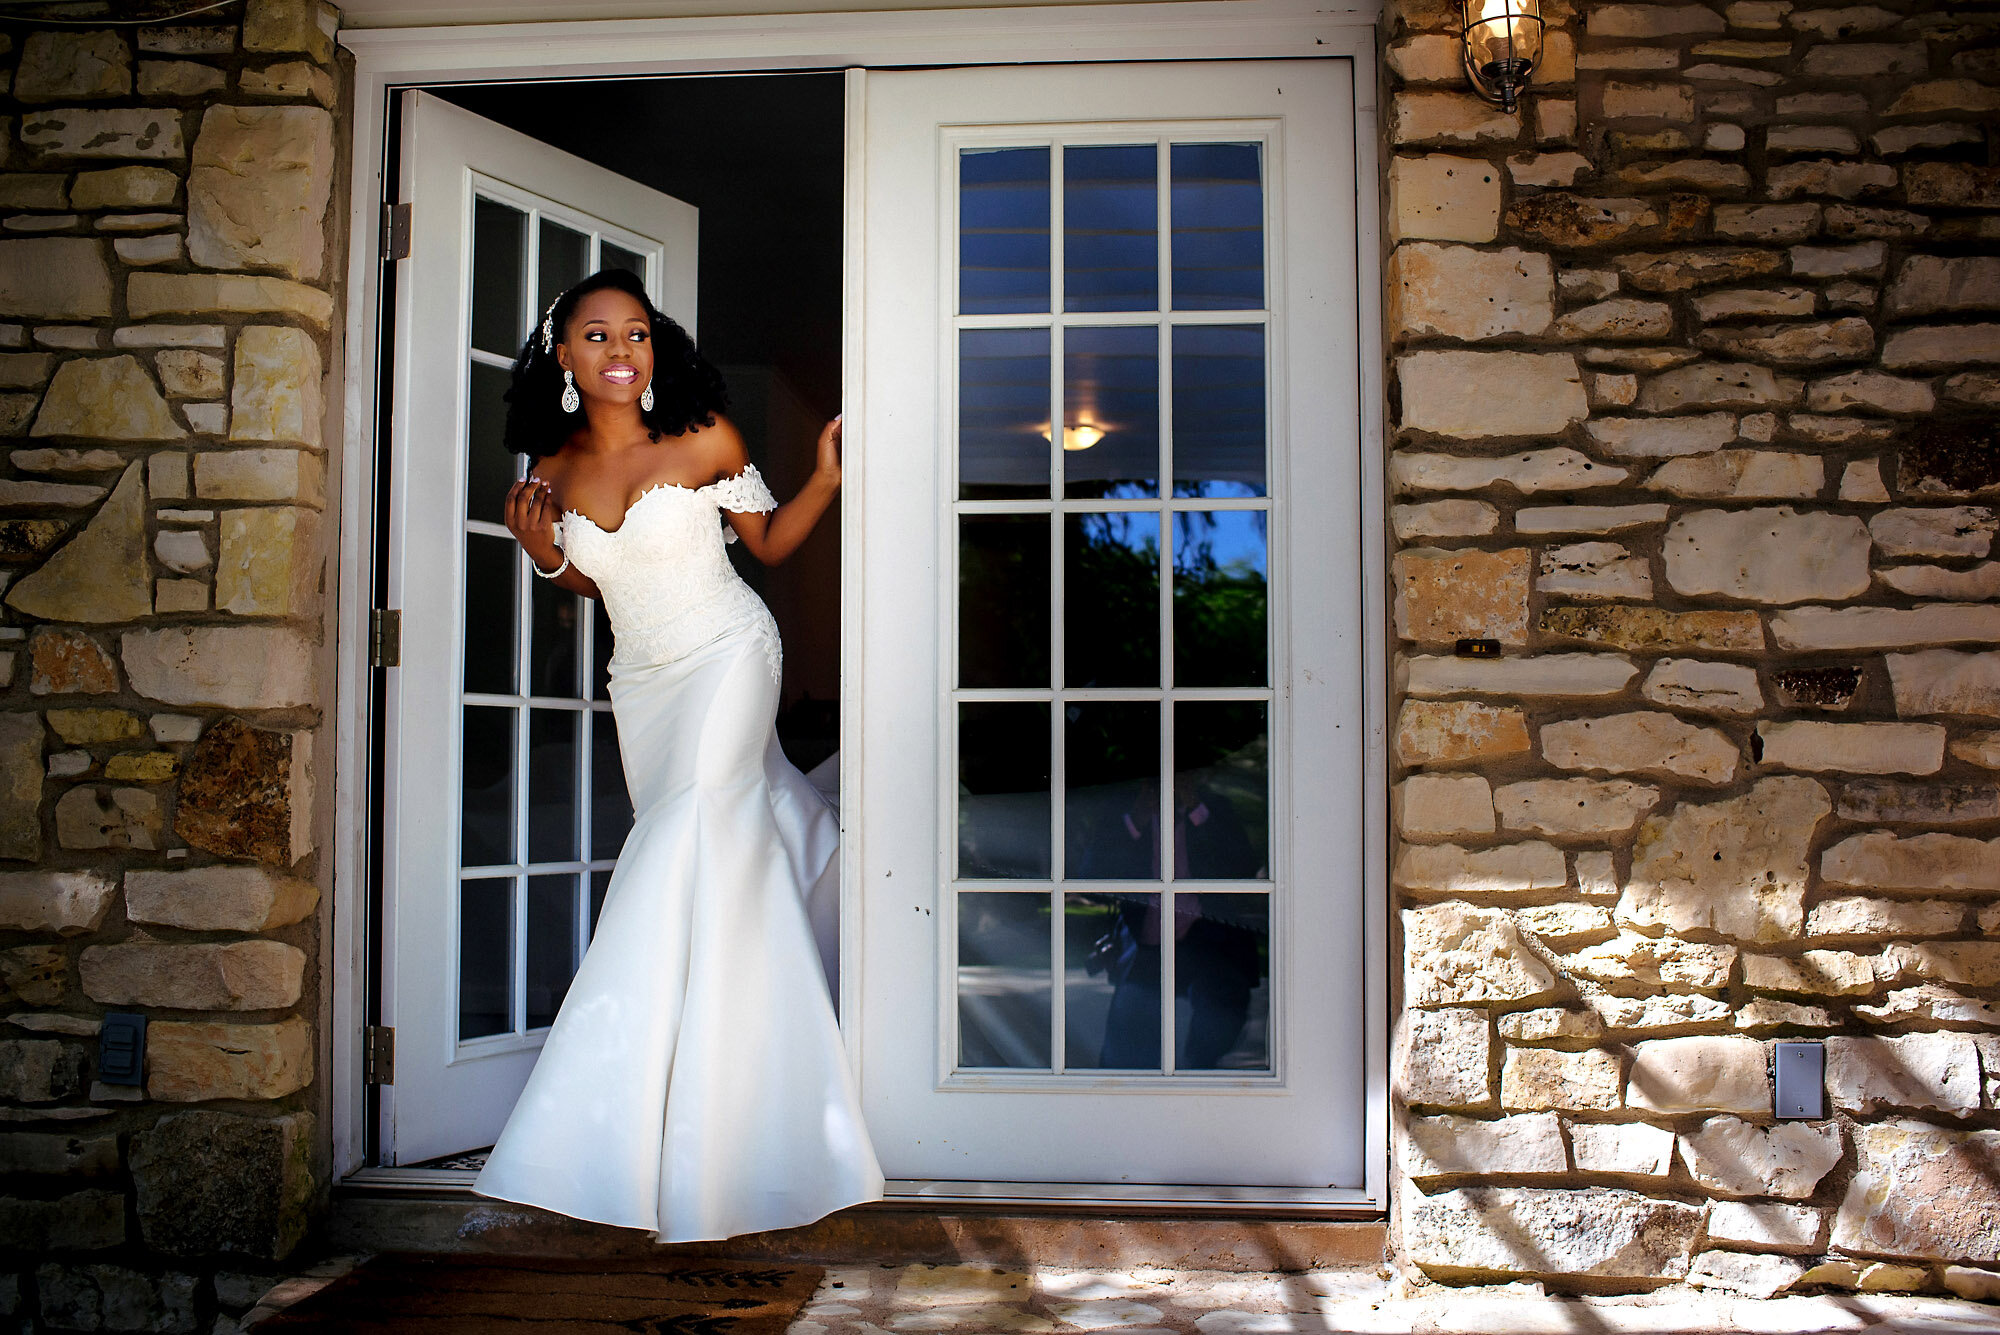 11-Austin-wedding-photographer-Jide-Alakija-bride walking out of the suite.jpg.JPG